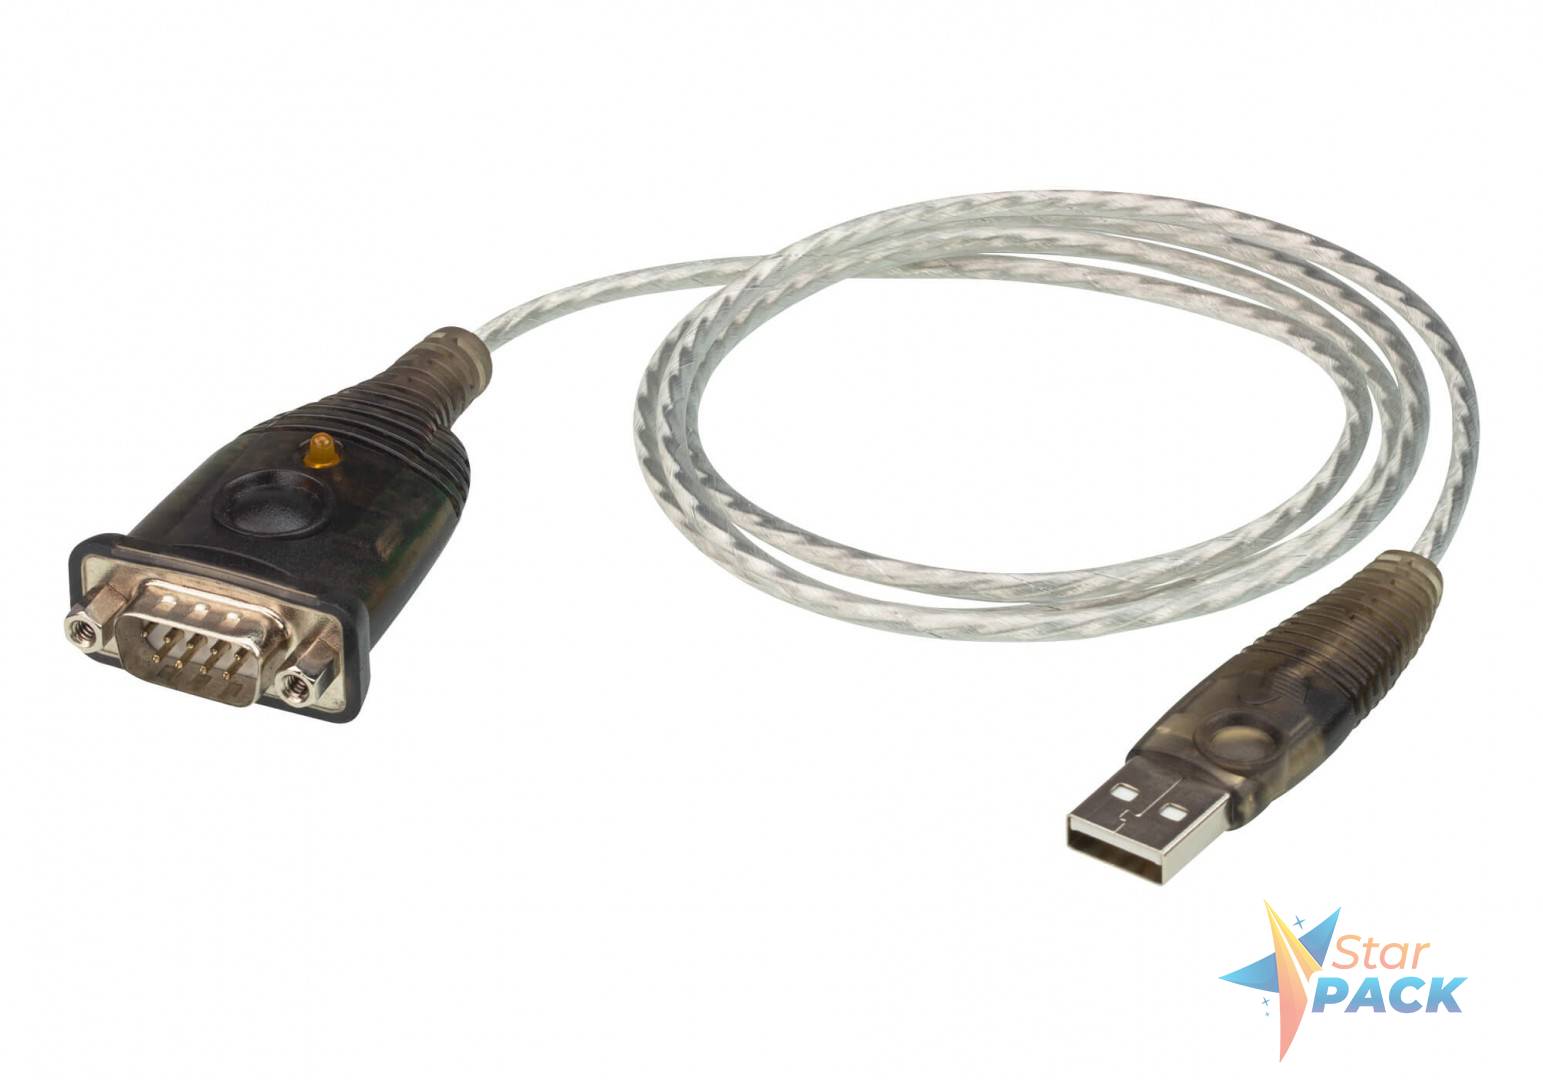 ADAPTOR USB ATEN, USB 2.0 la Serial RS232, 1 m, gri